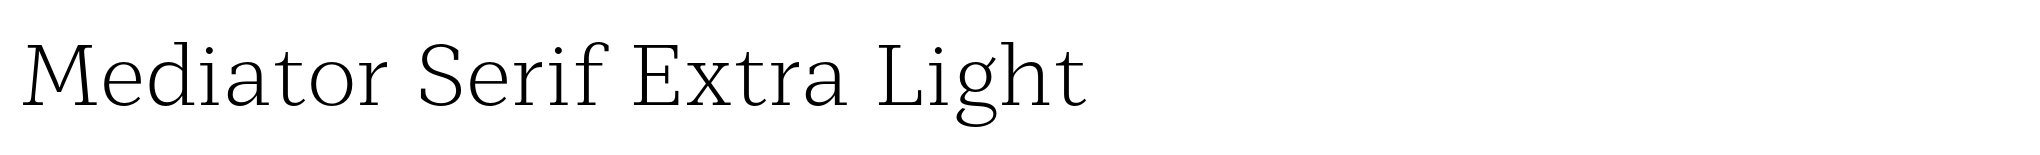 Mediator Serif Extra Light image